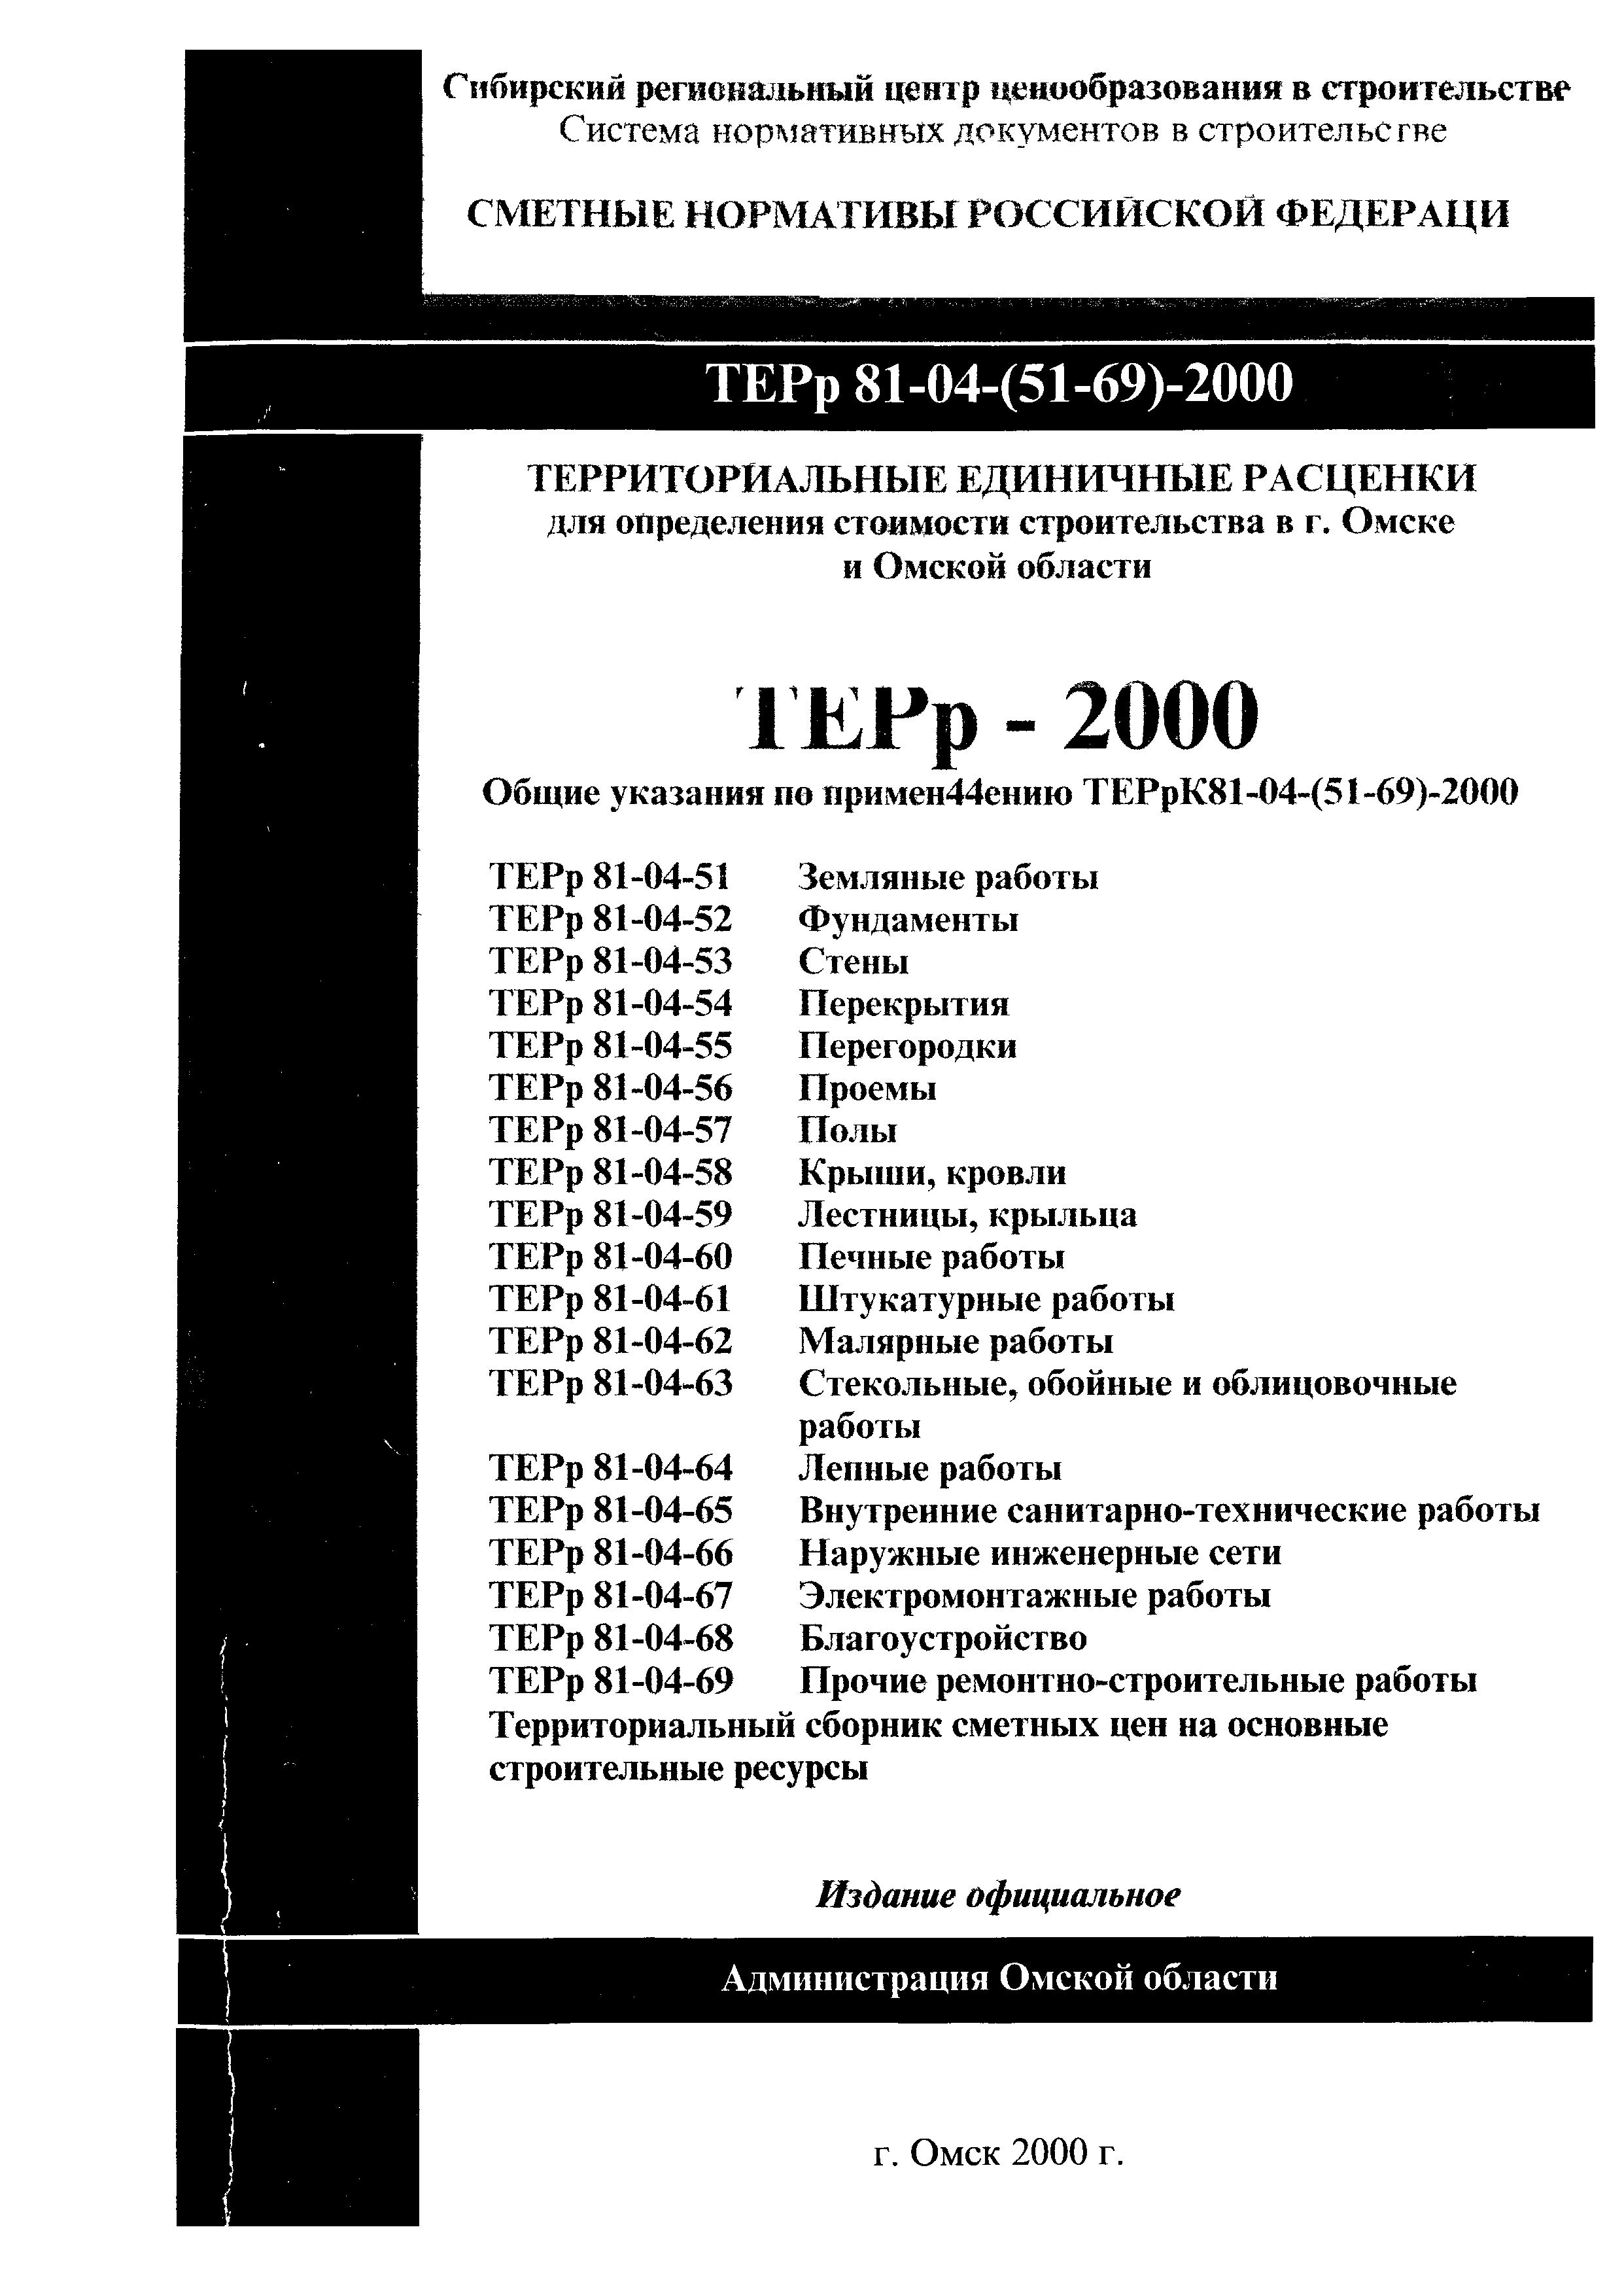 ТЕРр Омской области 2000-65